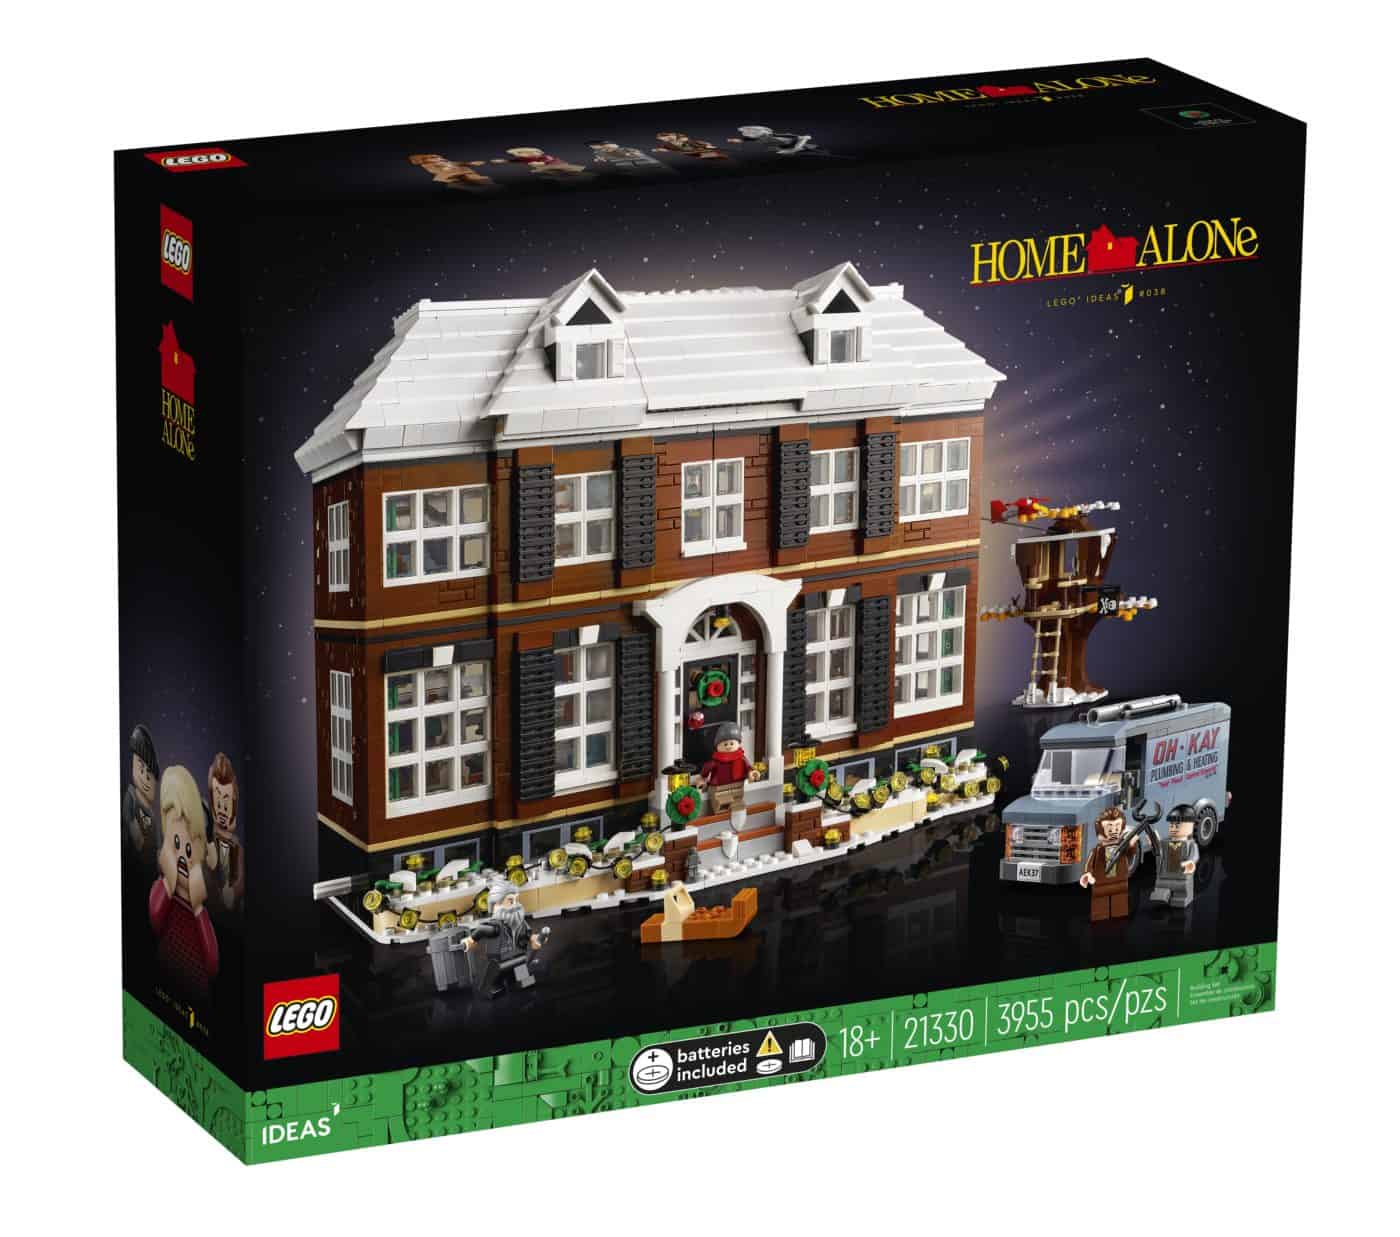 LEGO 21330 Home Alone Box Front 1400x1237 1